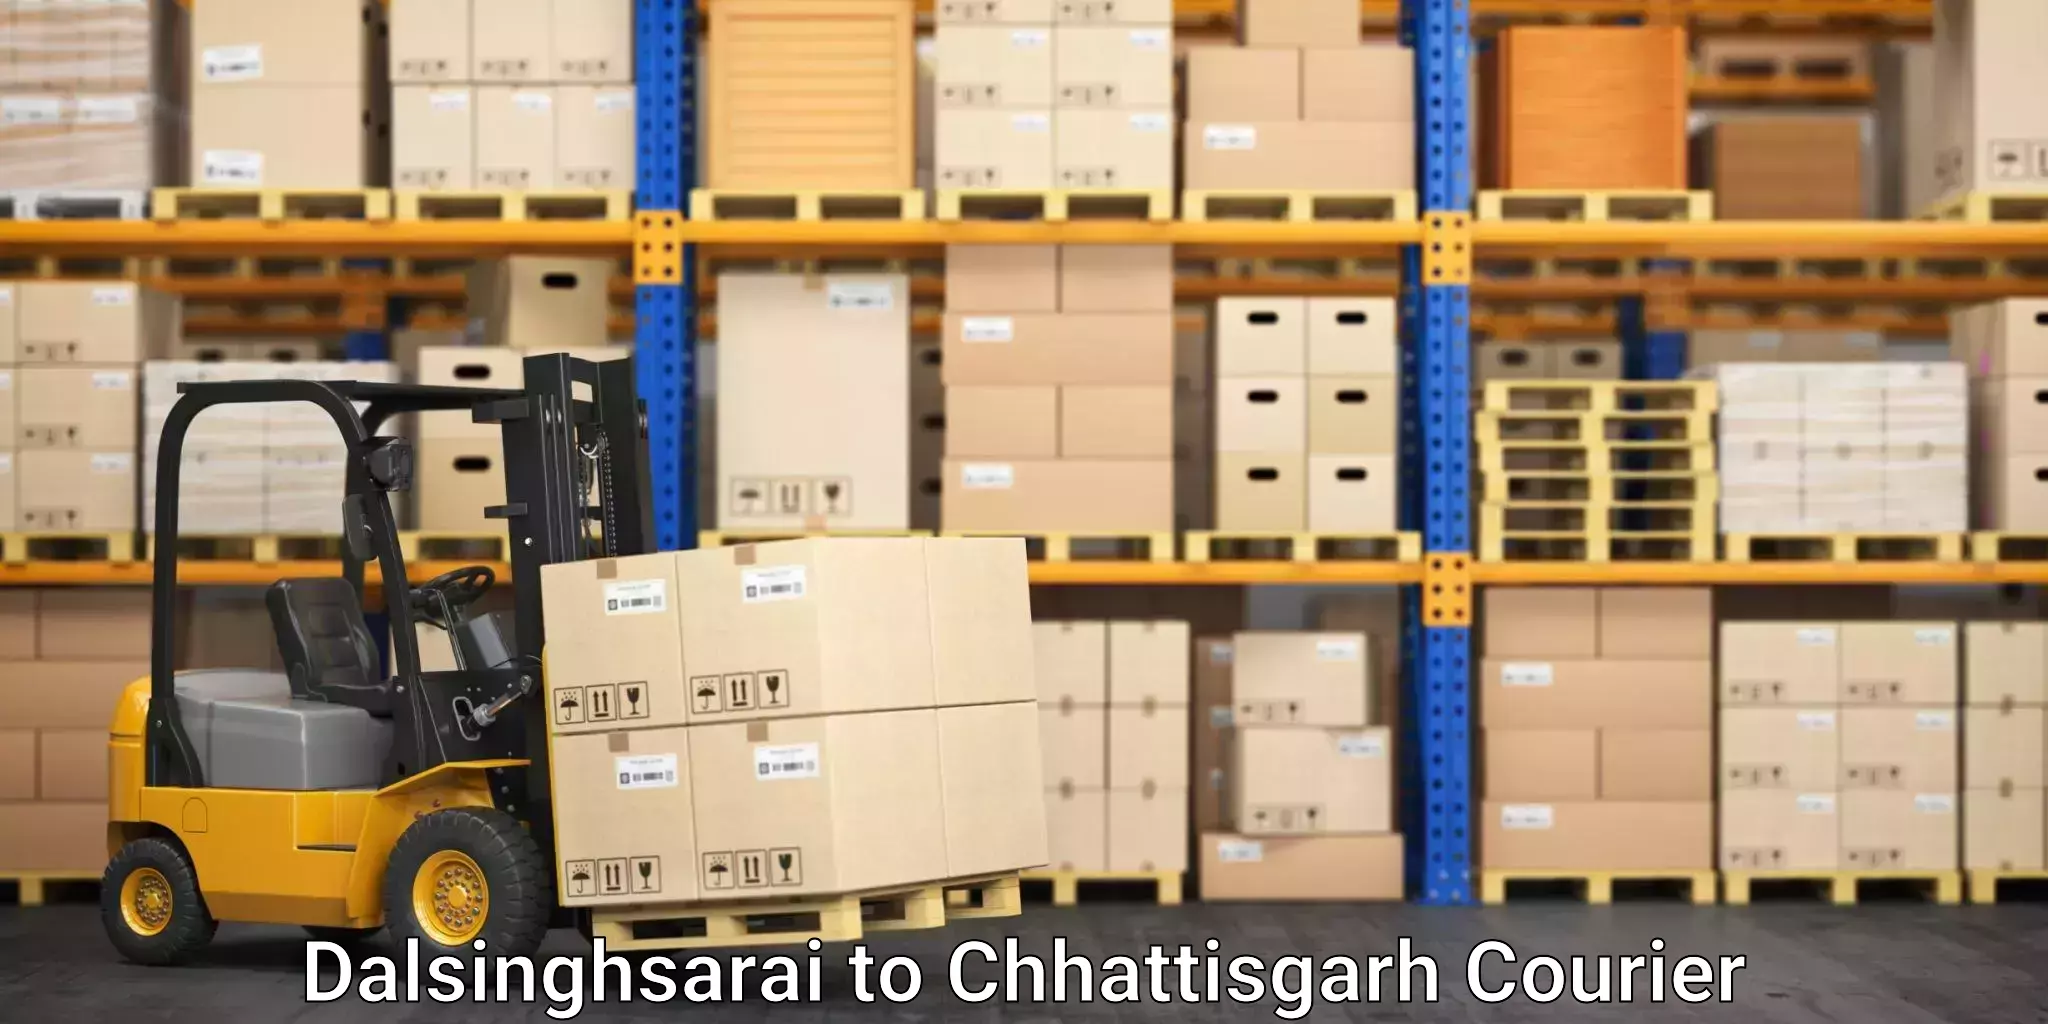 Furniture moving plans Dalsinghsarai to Raigarh Chhattisgarh